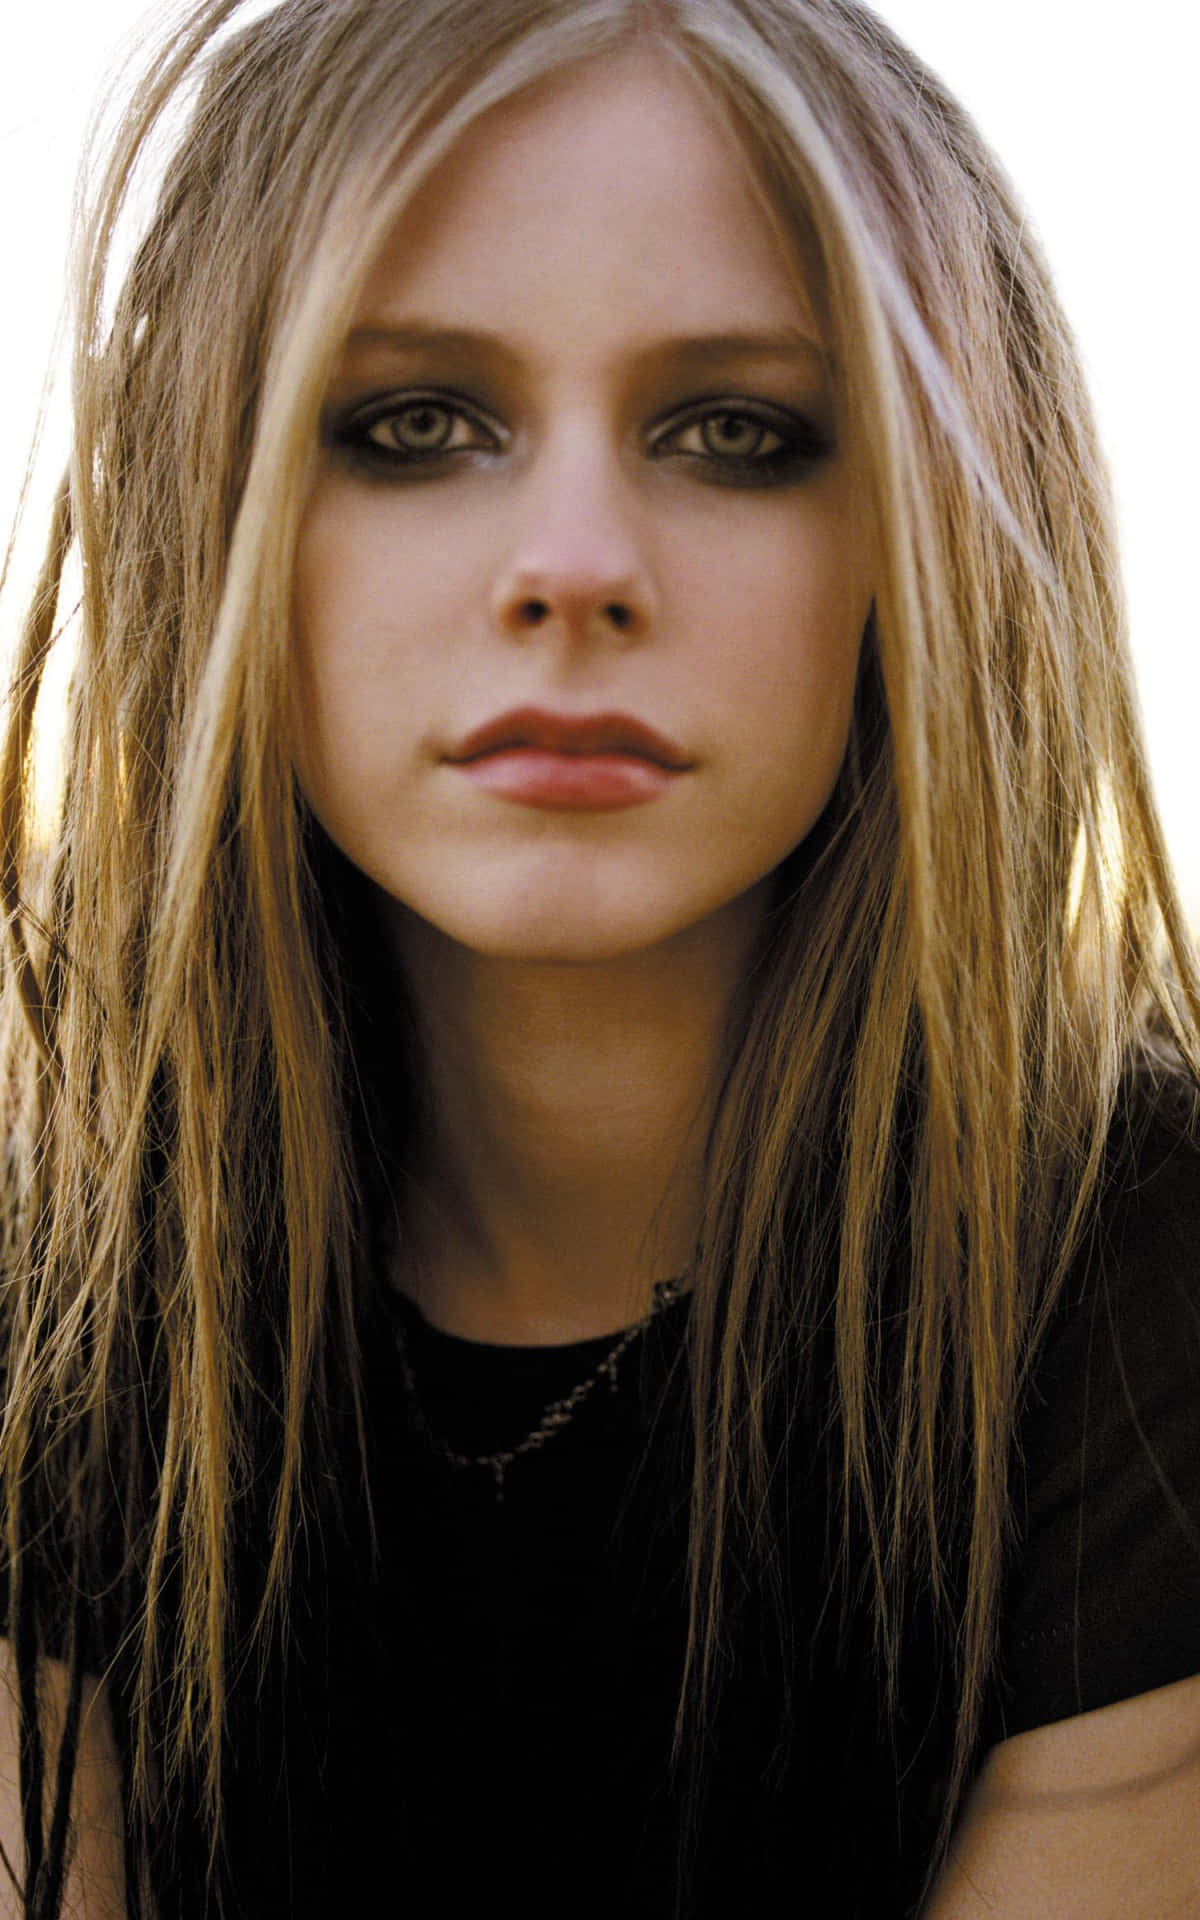 Canadian Pop Star Avril Lavigne In Concert